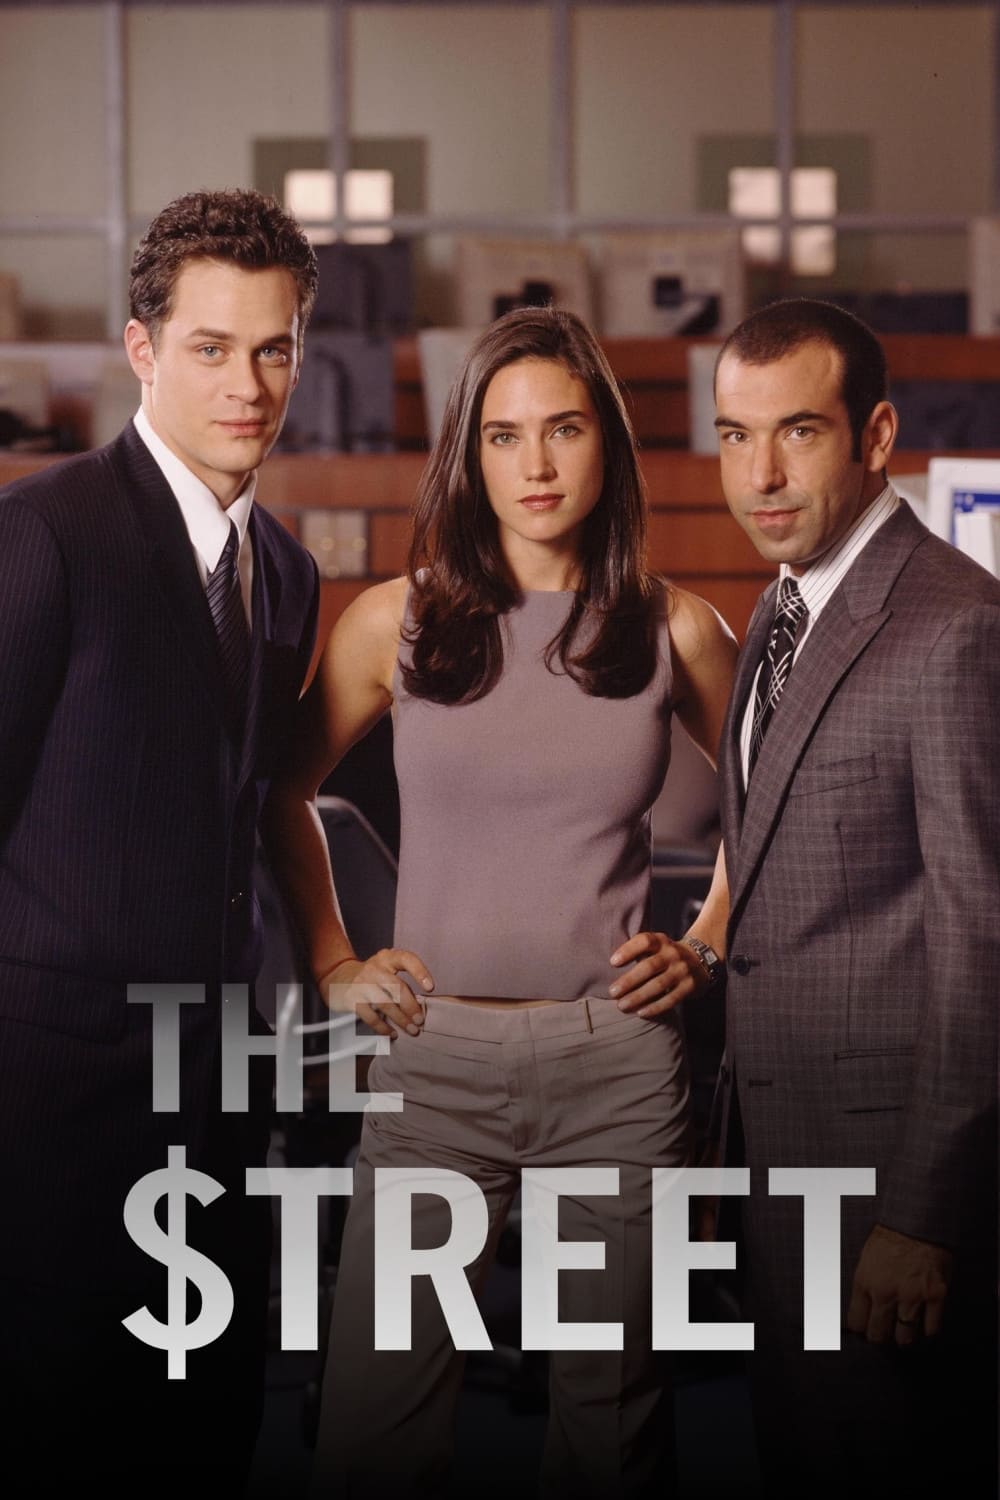 The $treet (2000)